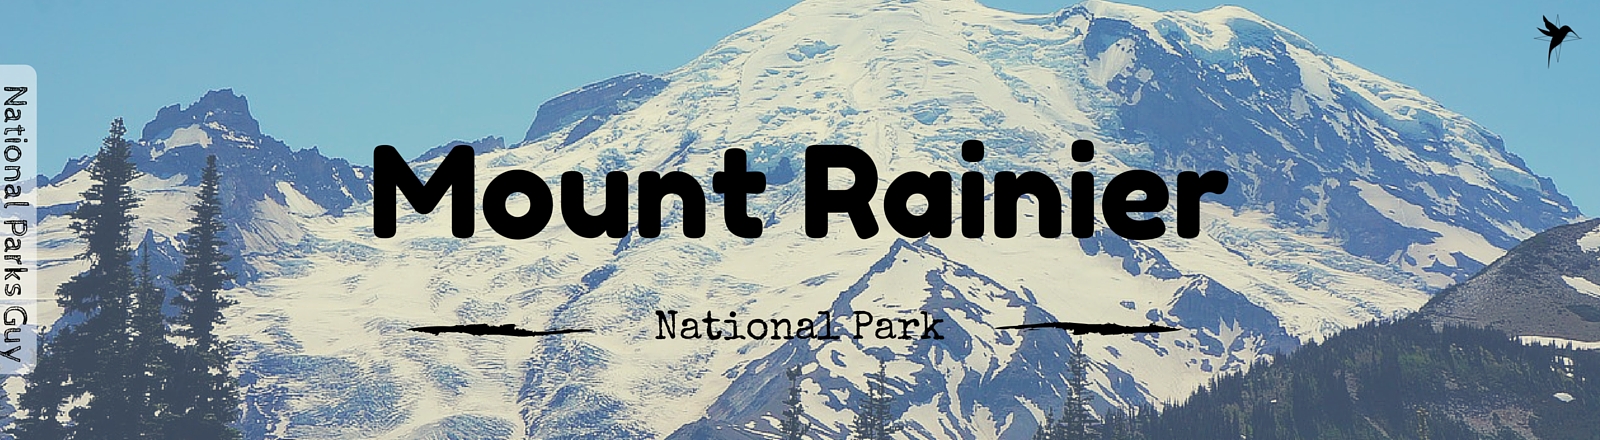 Mount Rainier National Park, USA, National Parks Guy, Stories, Tales, Adventures, Wildlife